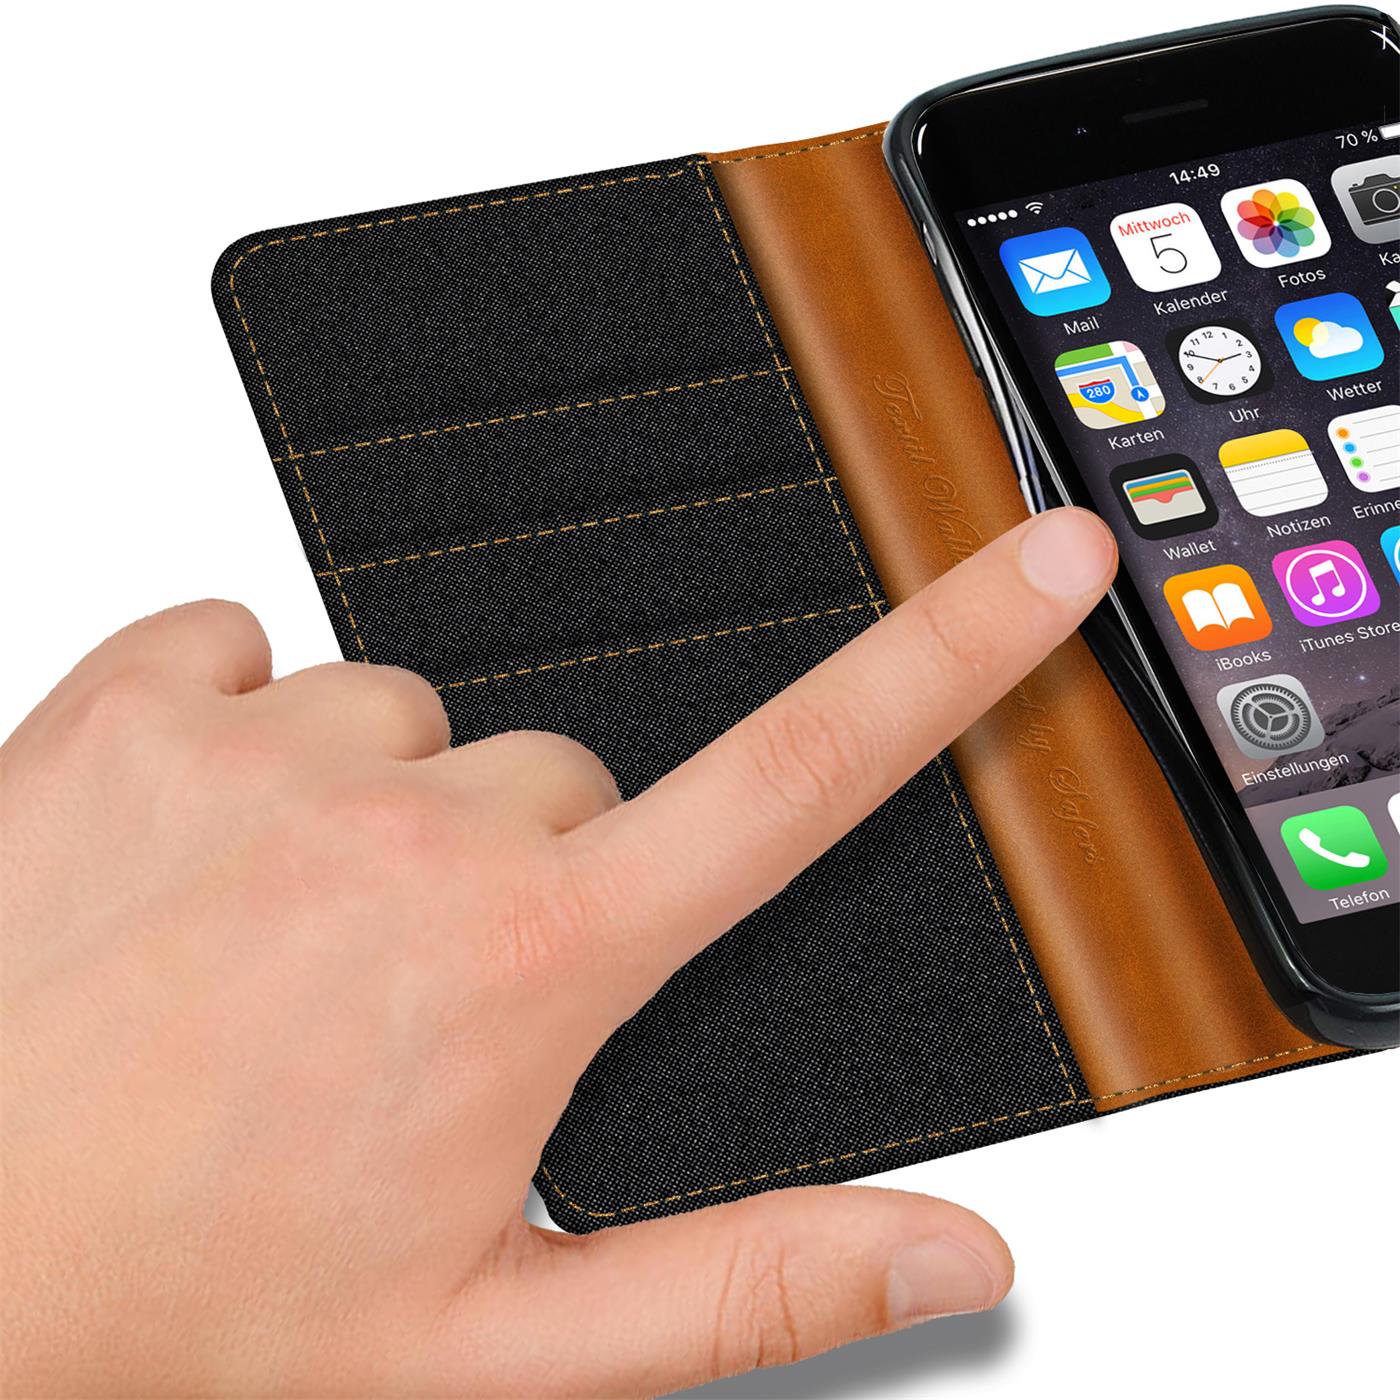 nuevo Terciopelo celular bolso funda protectora cubierta Cover Flip case para Apple iPhone 5 5s